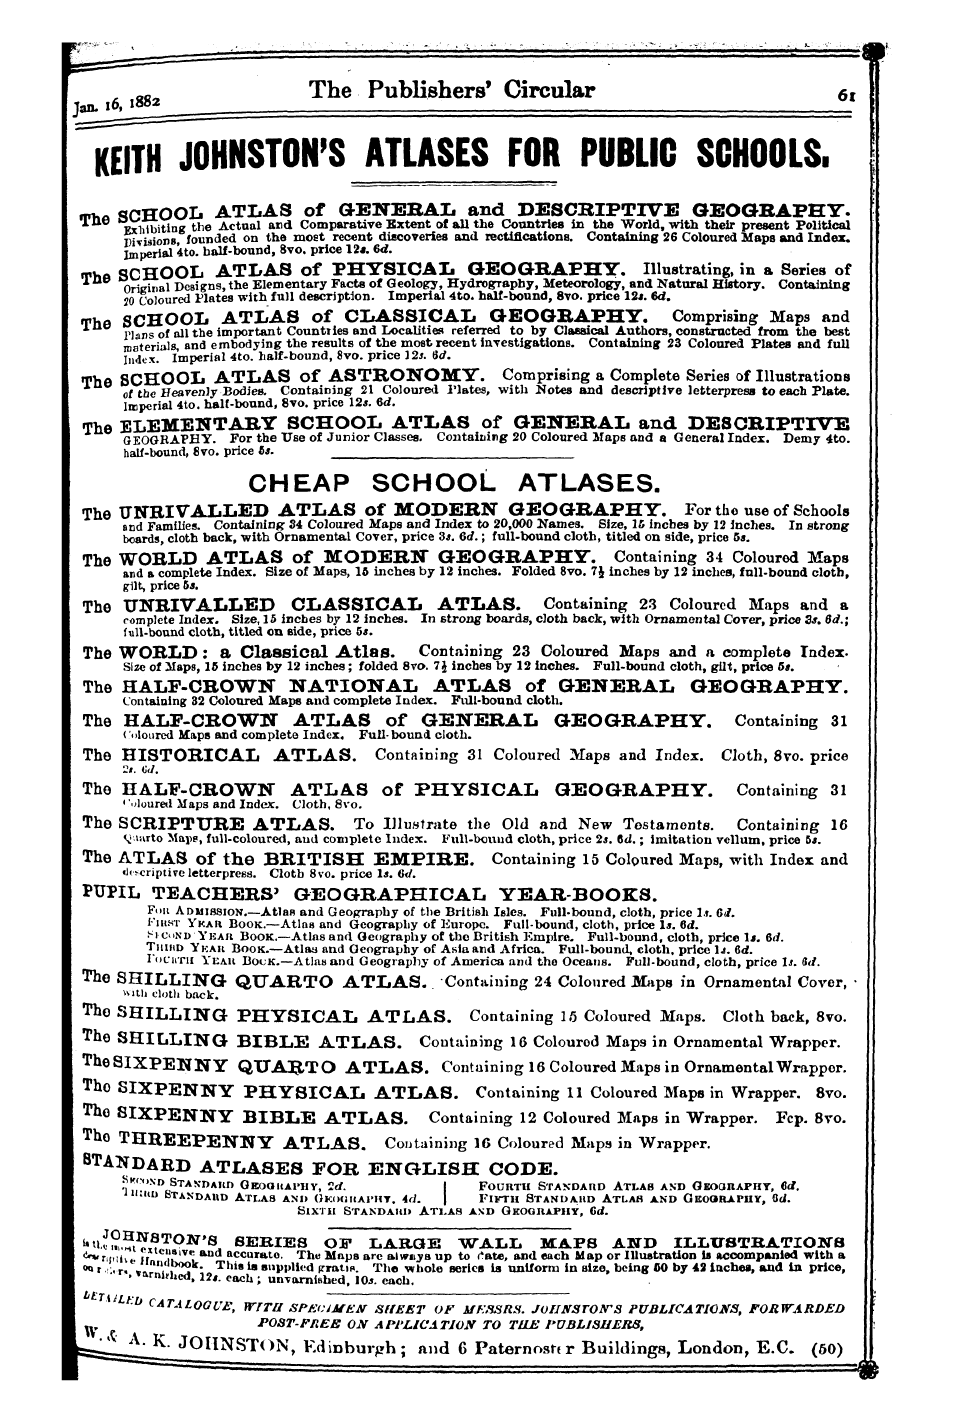 Publishers’ Circular (1880-1890): jS F Y, 1st edition: 61